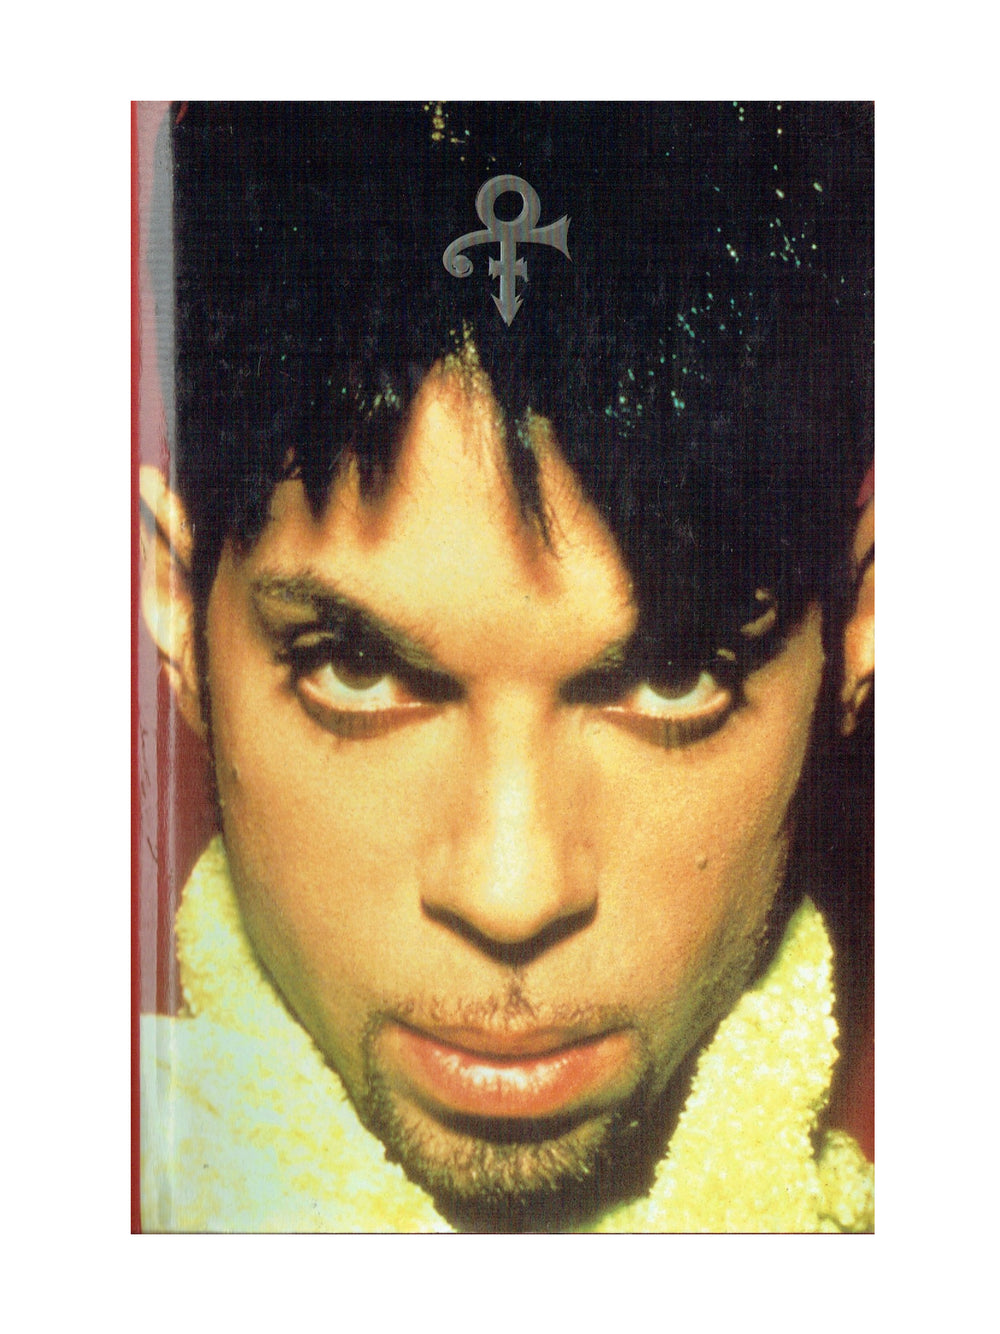 Prince – Slave To The Rhythm Hard Back Book Original Release Liz Jones